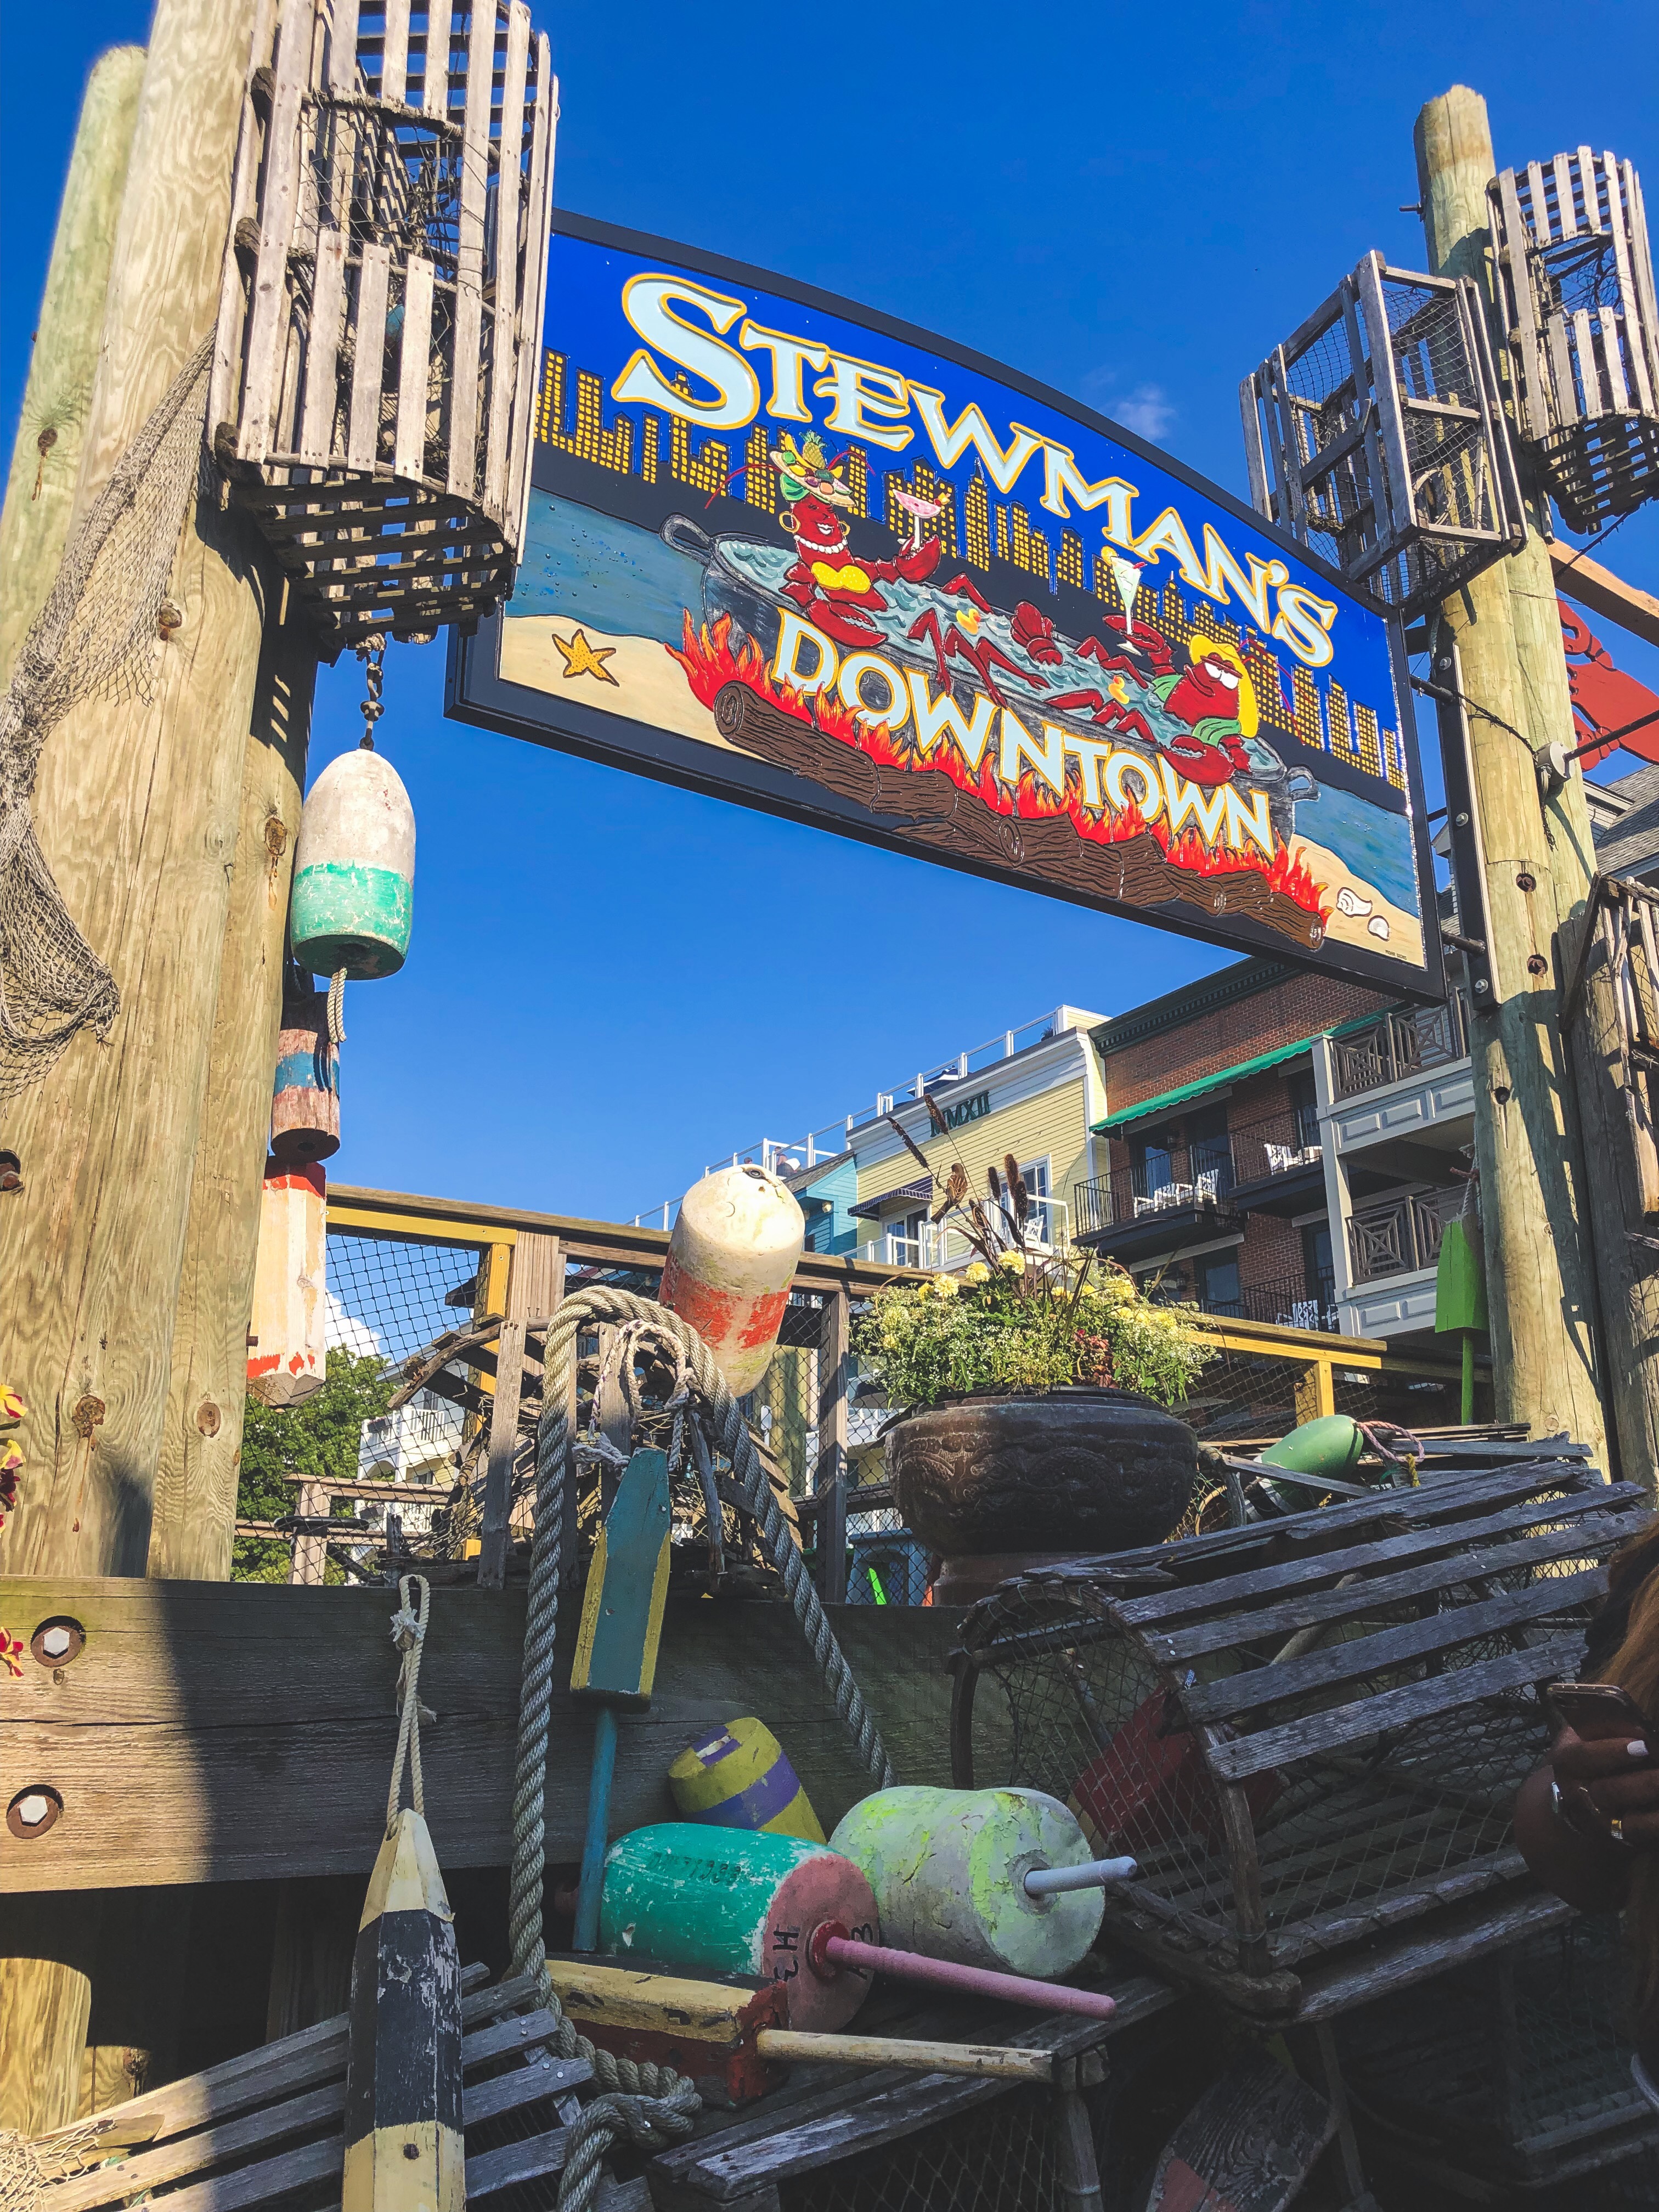 Stewman’s Downtown 